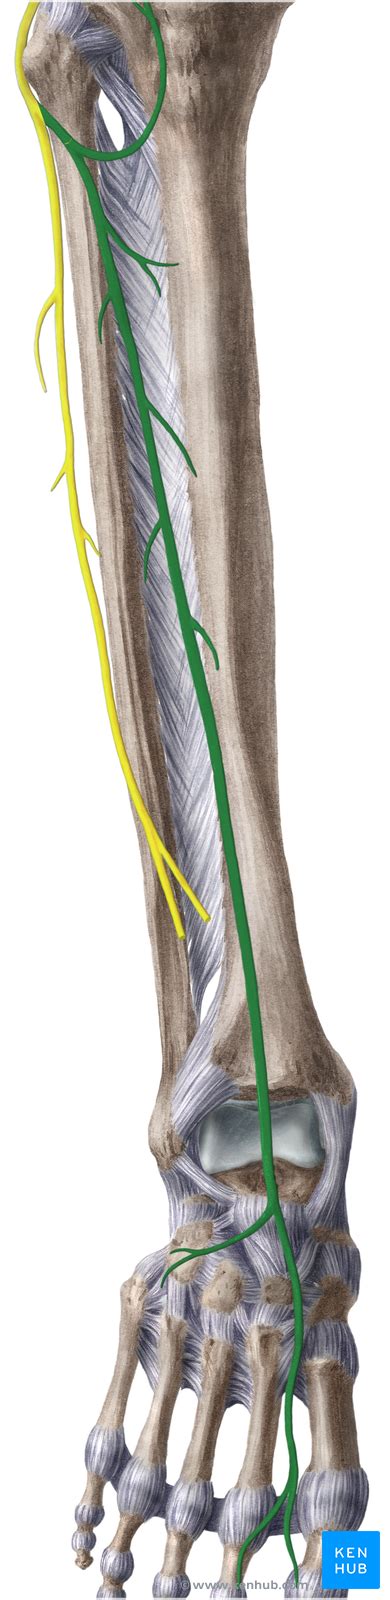 Common Fibular Peroneal Nerve Anatomy And Function Kenhub